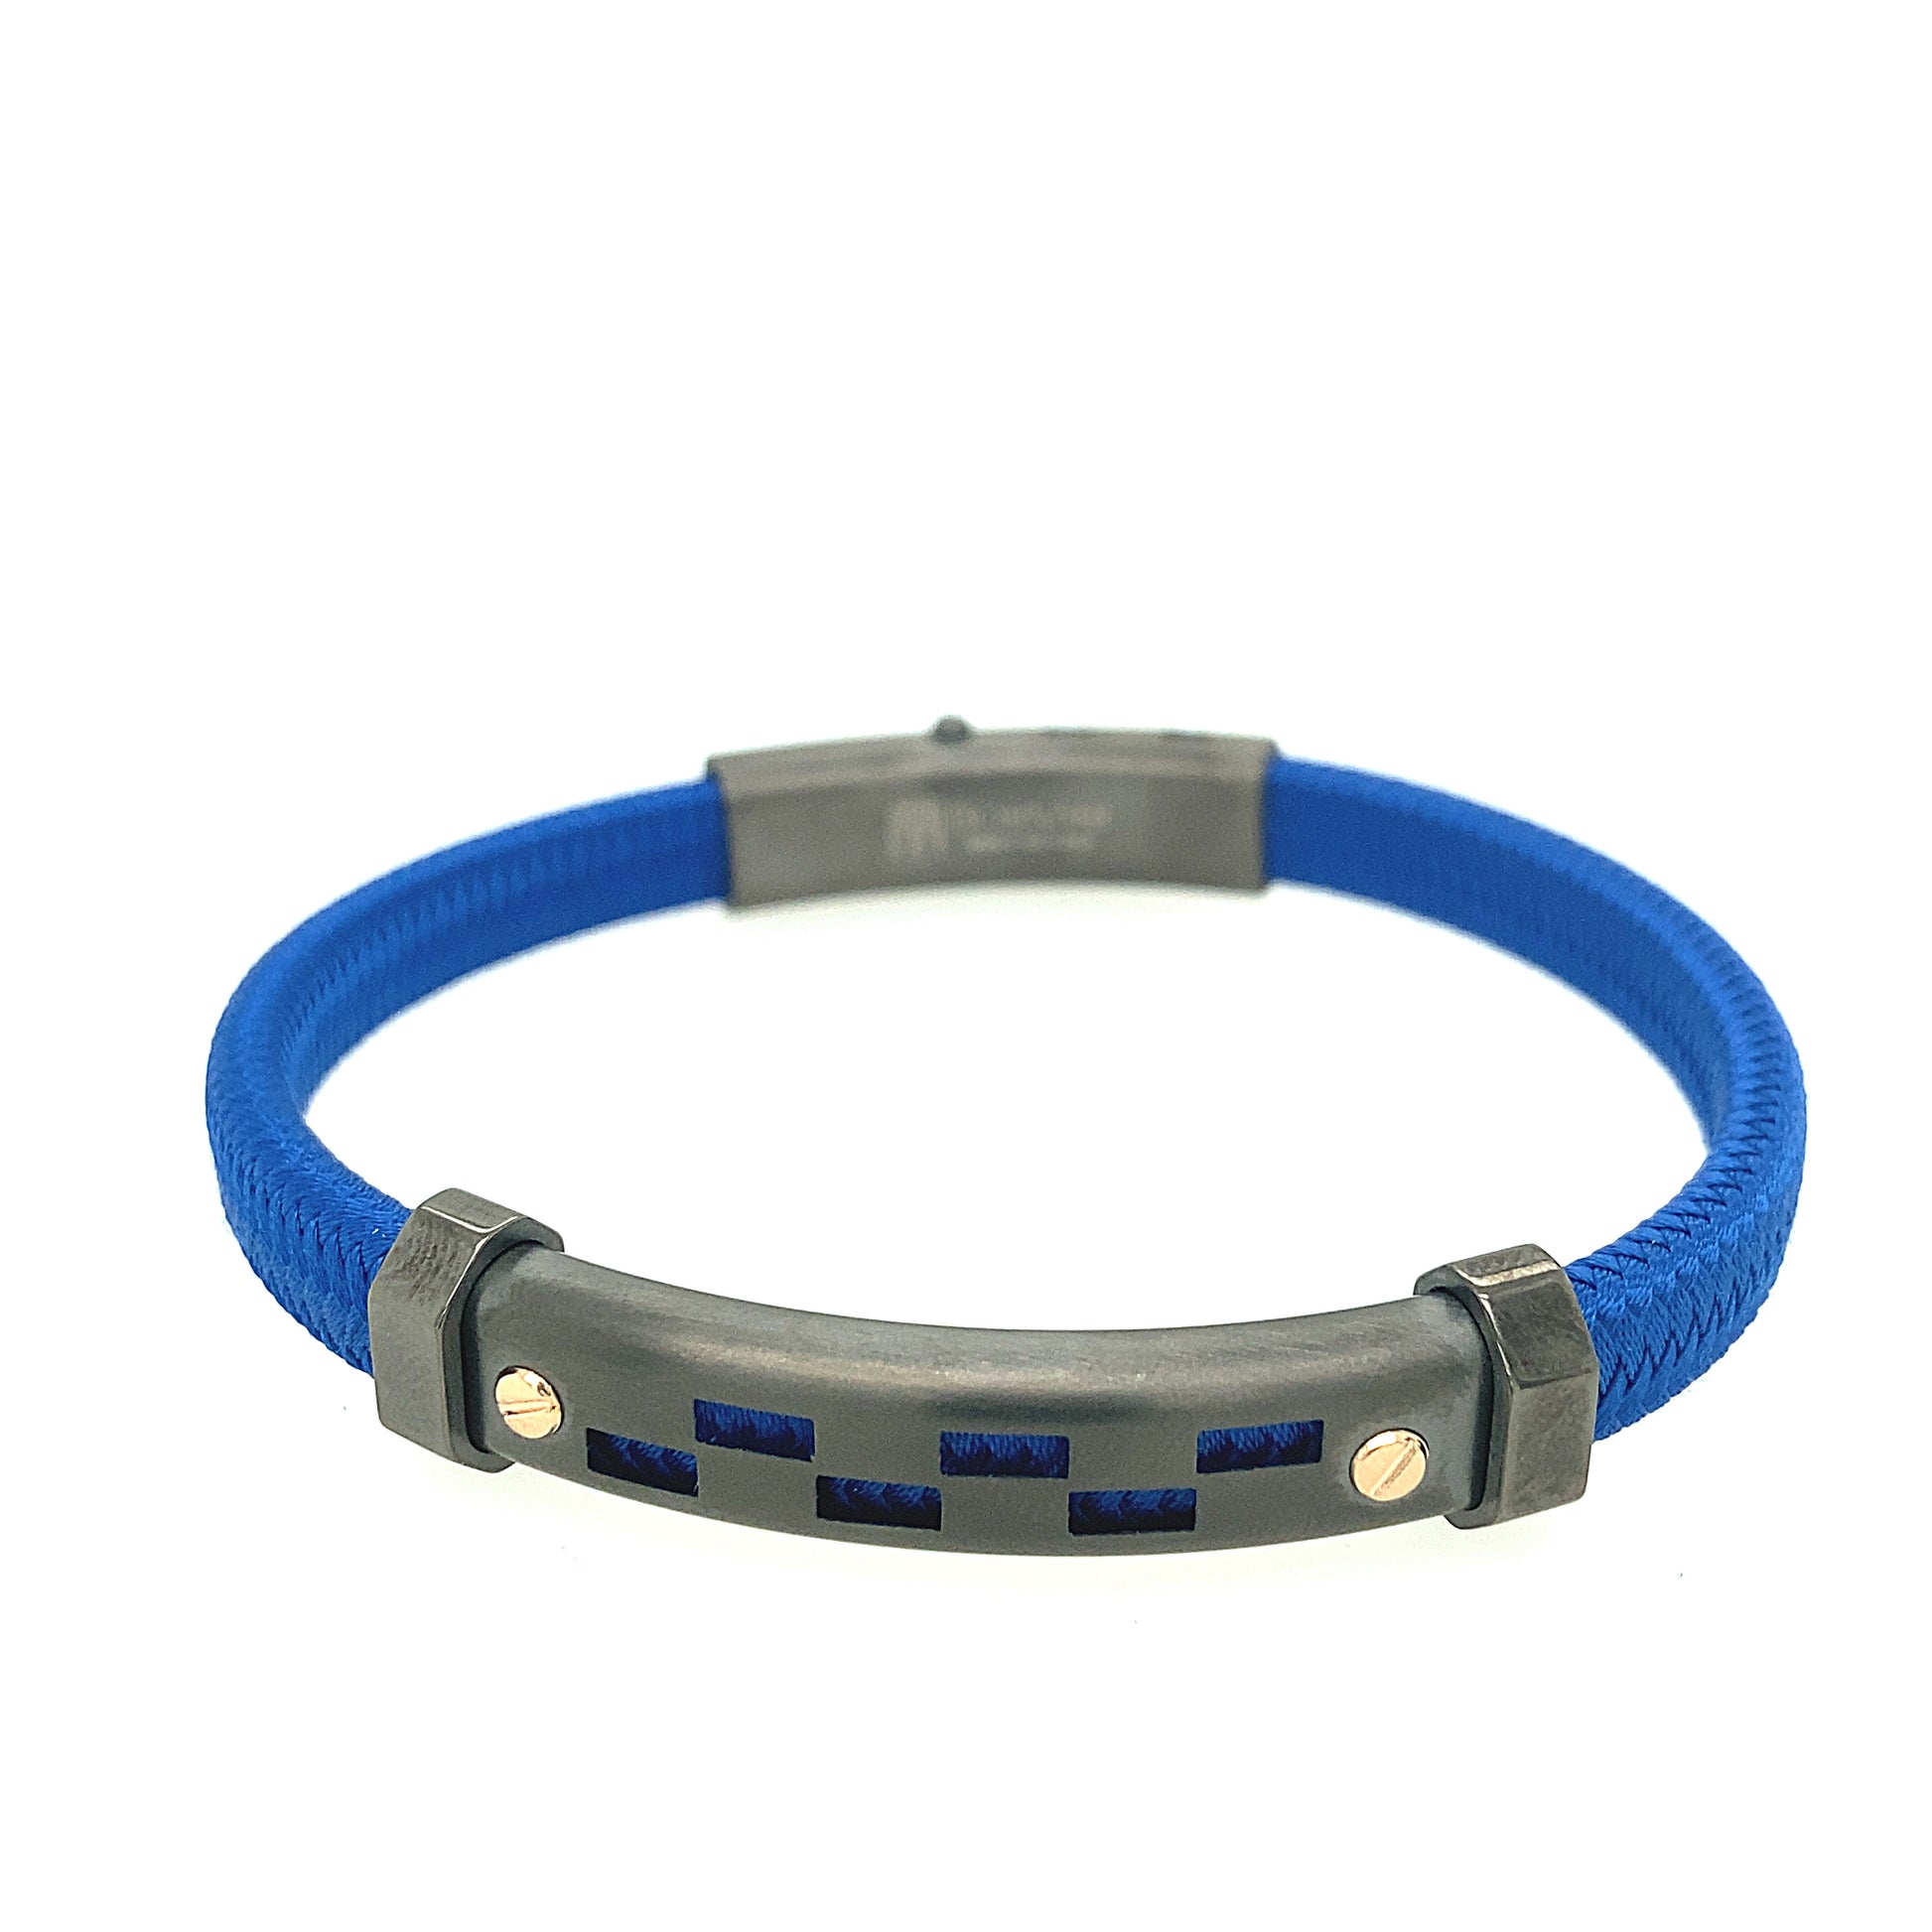 Titanium Polyester Charcoal Grey Cord Bracelet with Rose-Gold Screws | BORSARI | Luby 